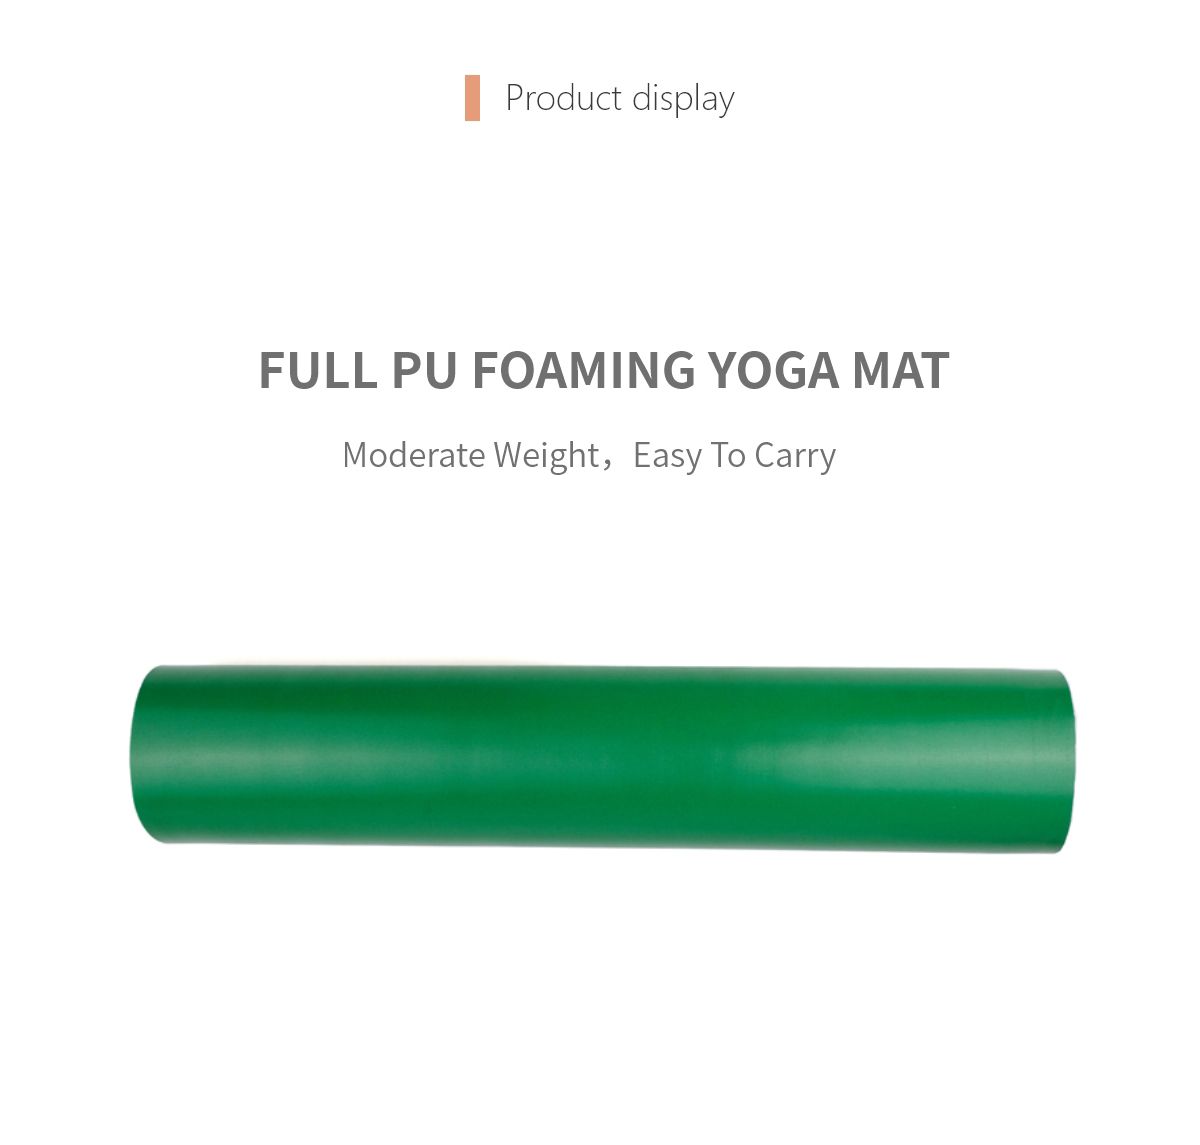 Full PU Foaming Yoga Mat